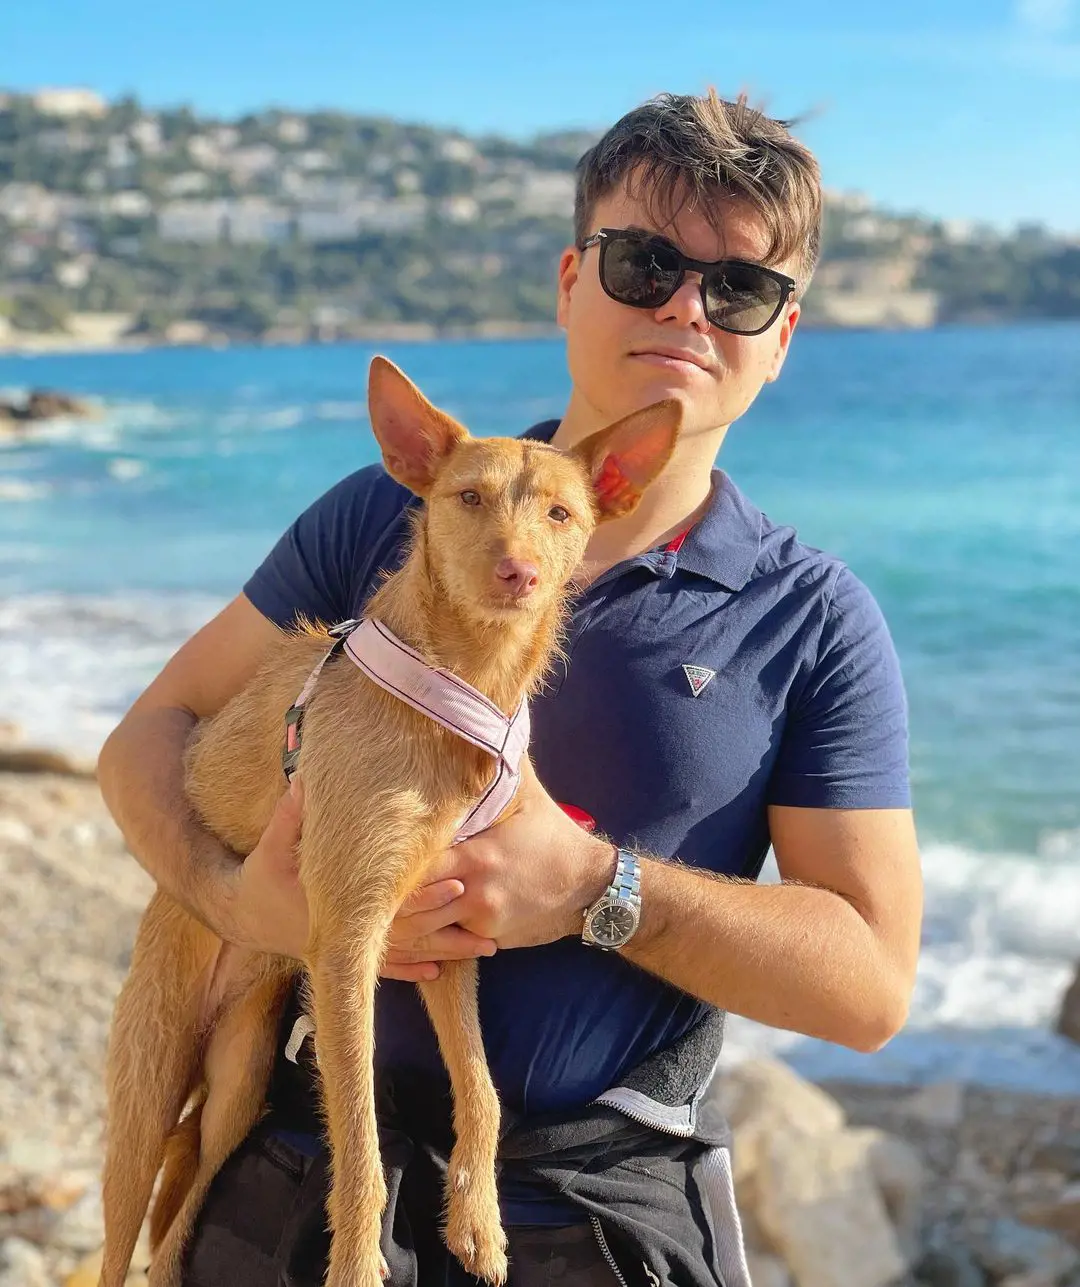 Jelly with his dog Nala enjoying the beach in Monte-Carlo, Monaco on January 29, 2021.